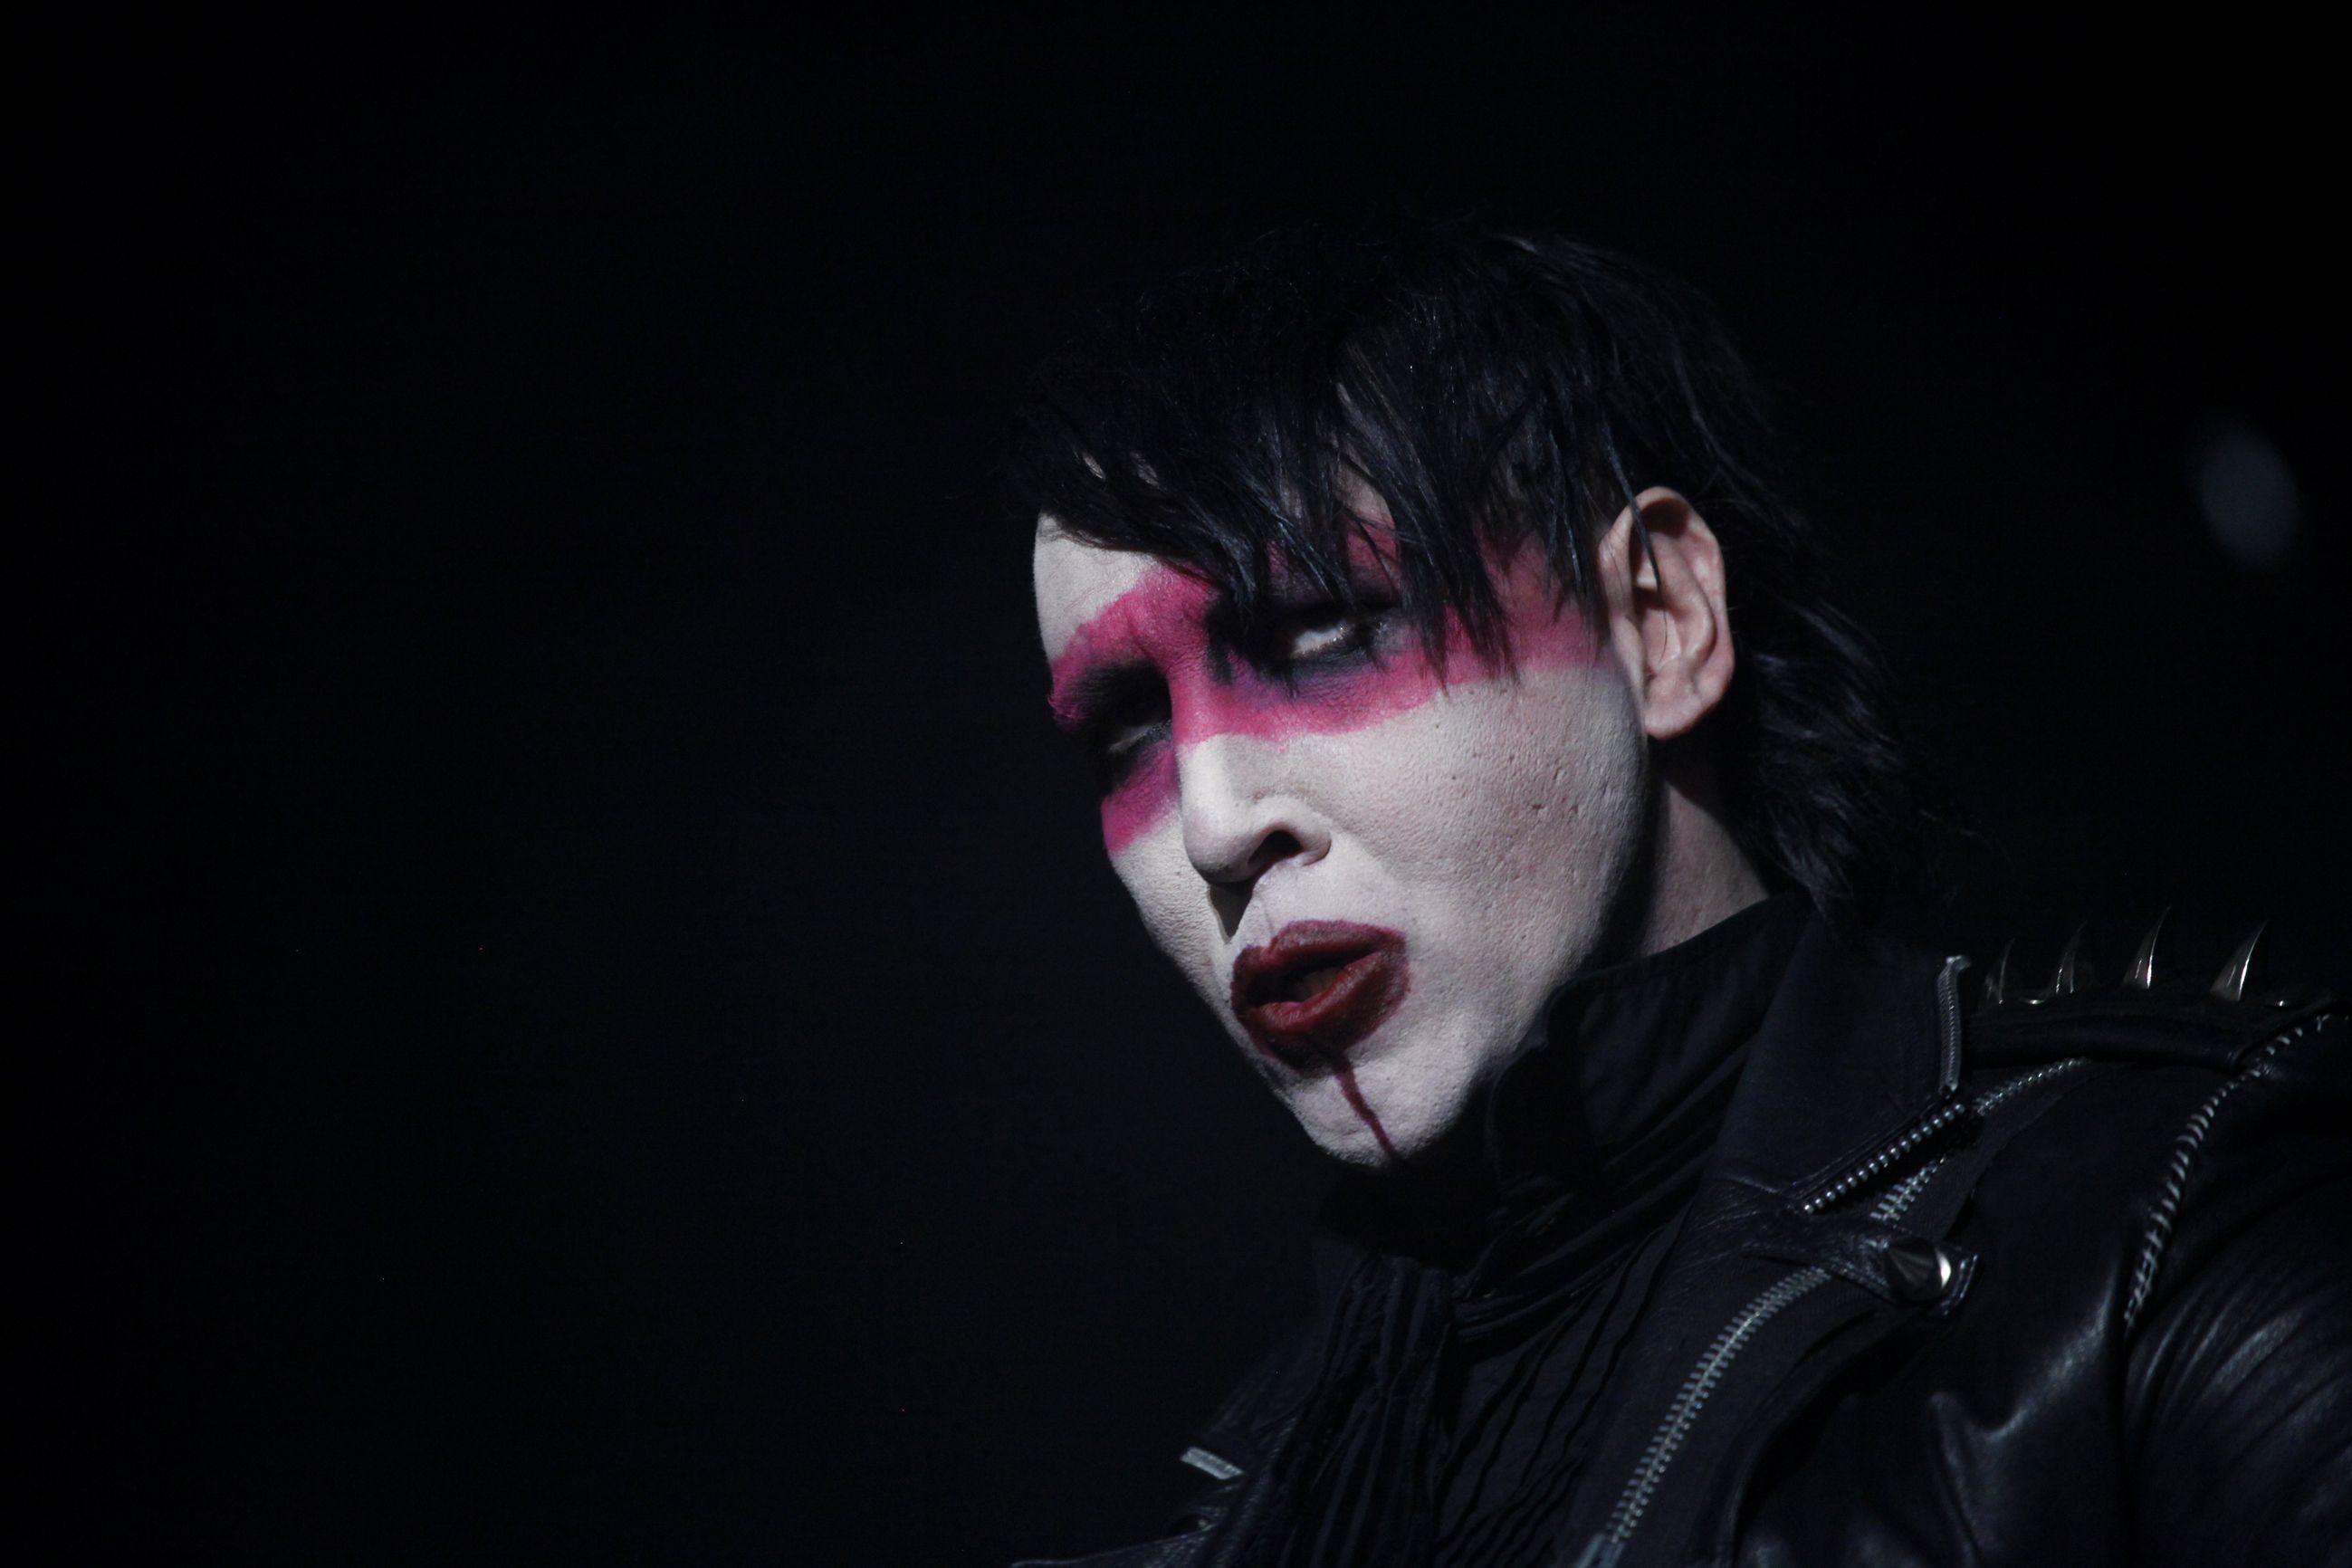 Hard rock singer Marilyn Manson wallpaper and image